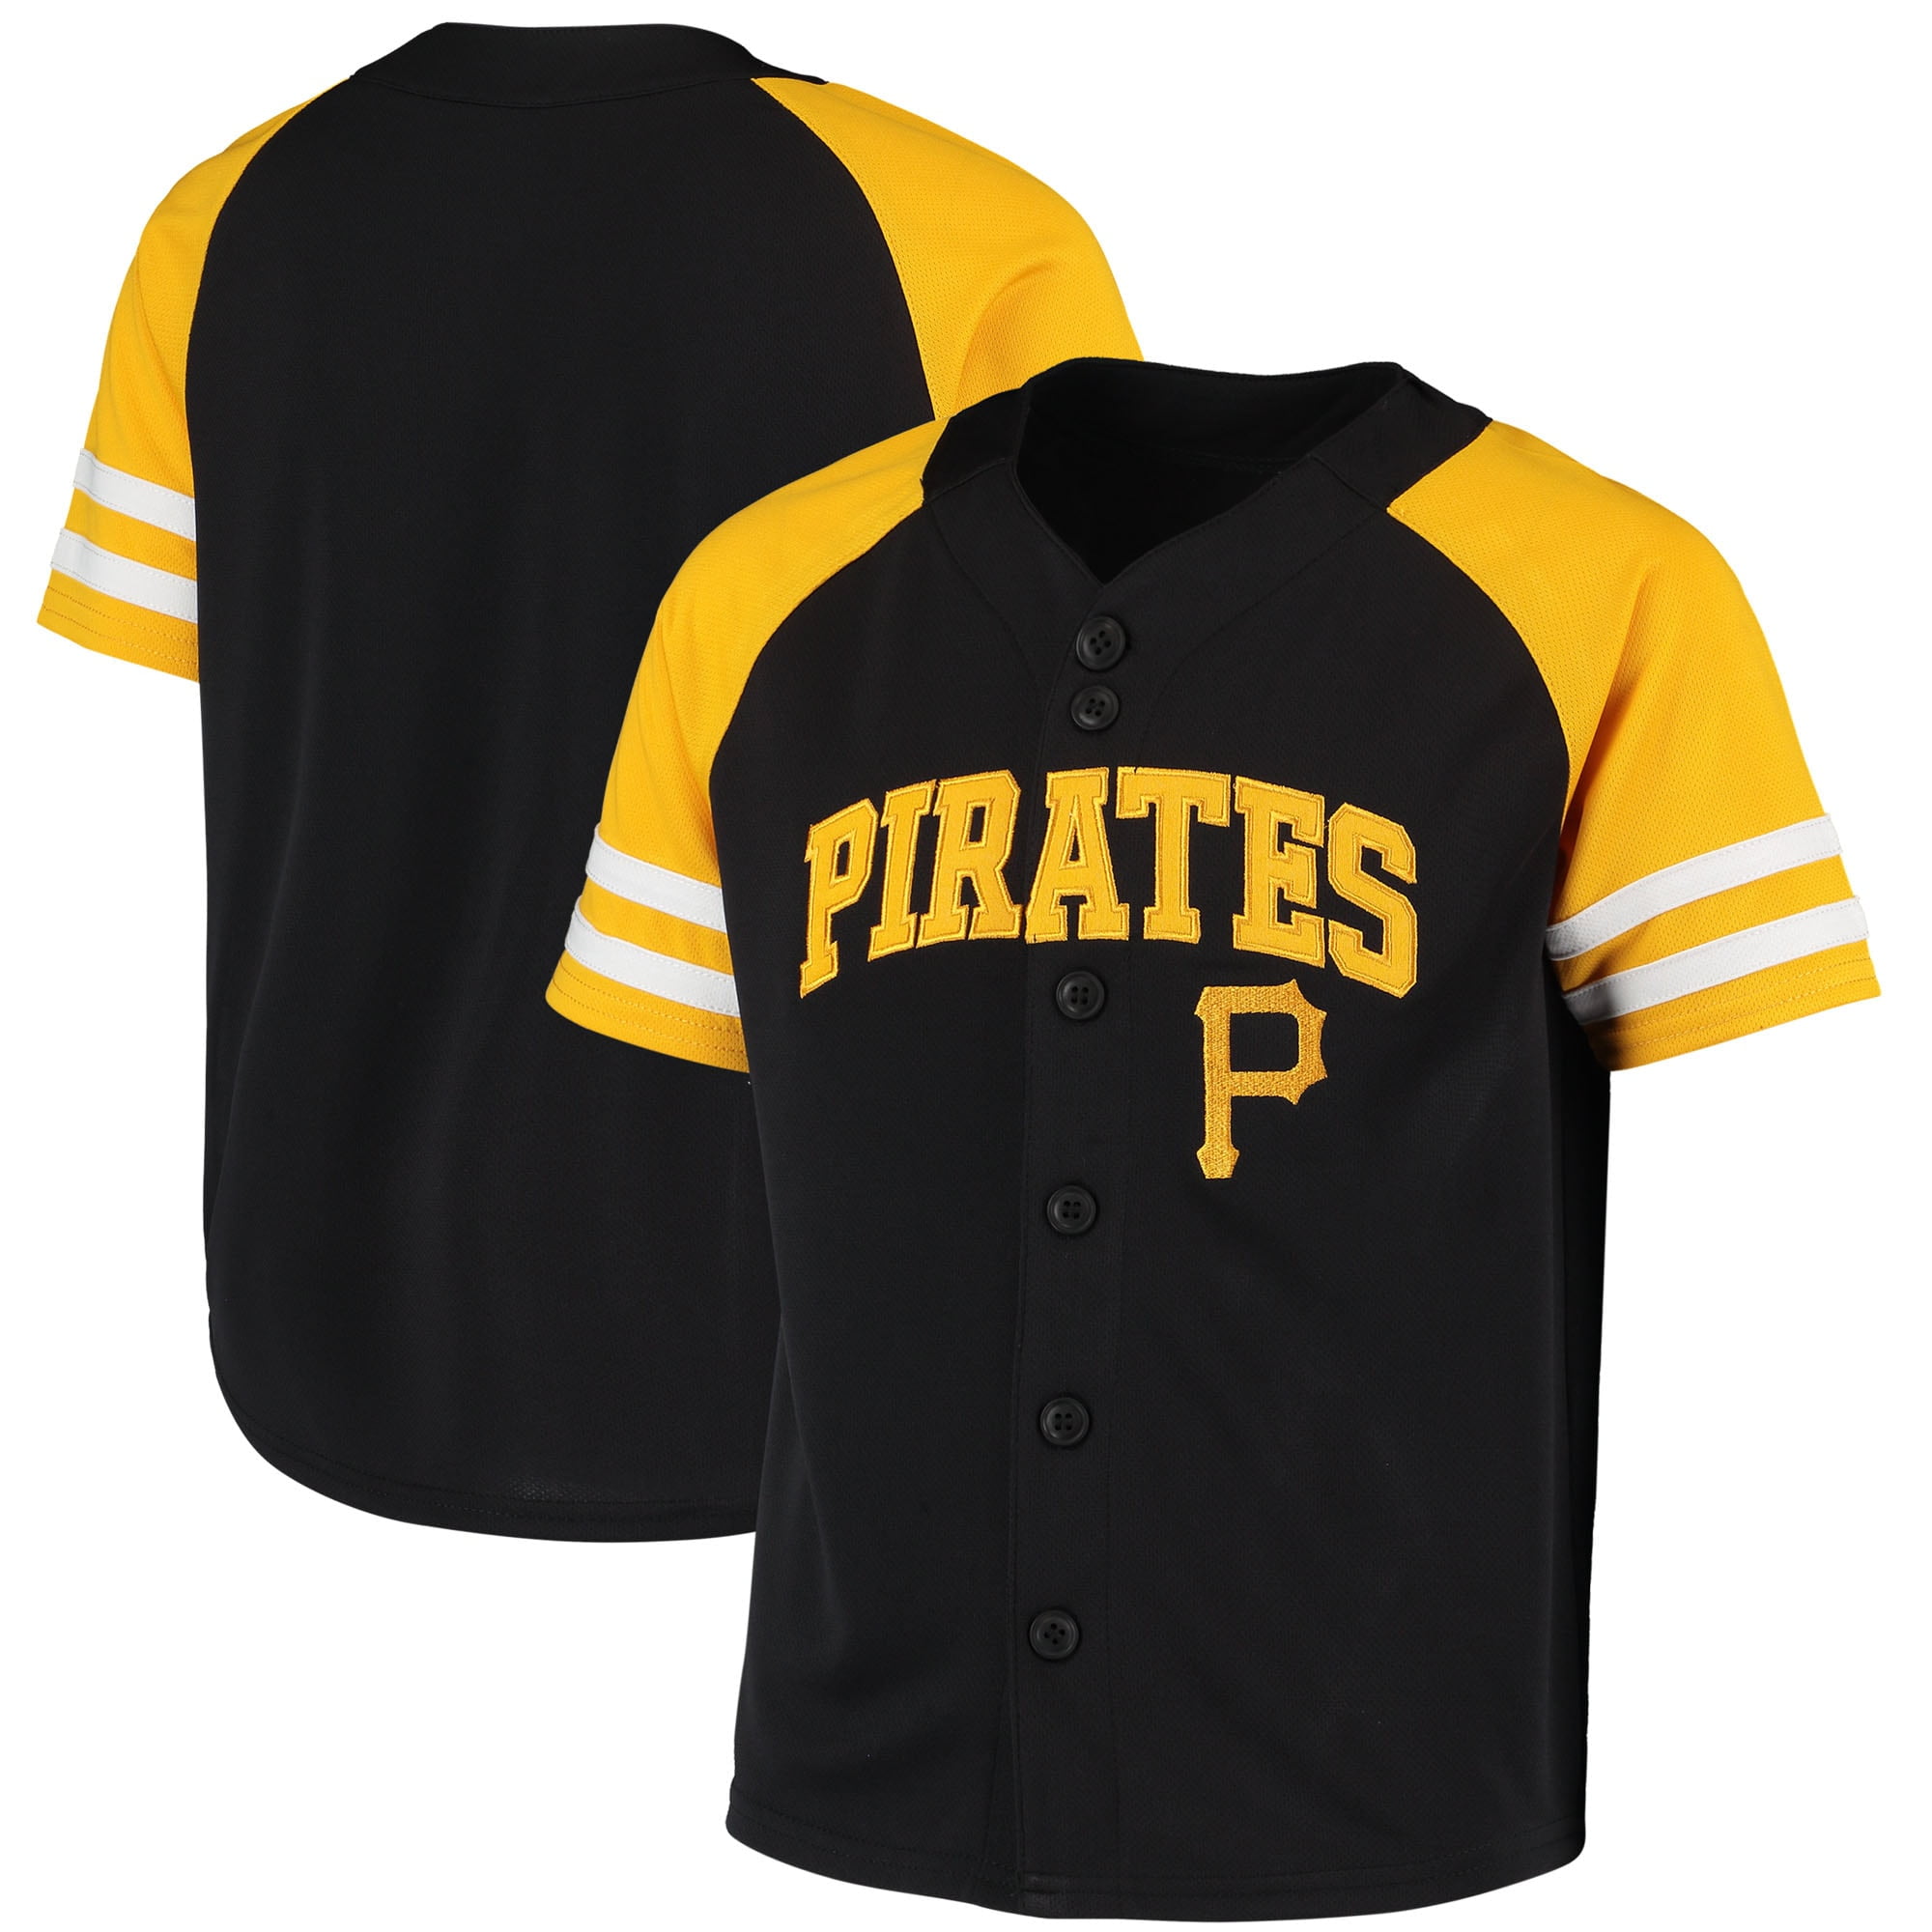 pirates jersey sale